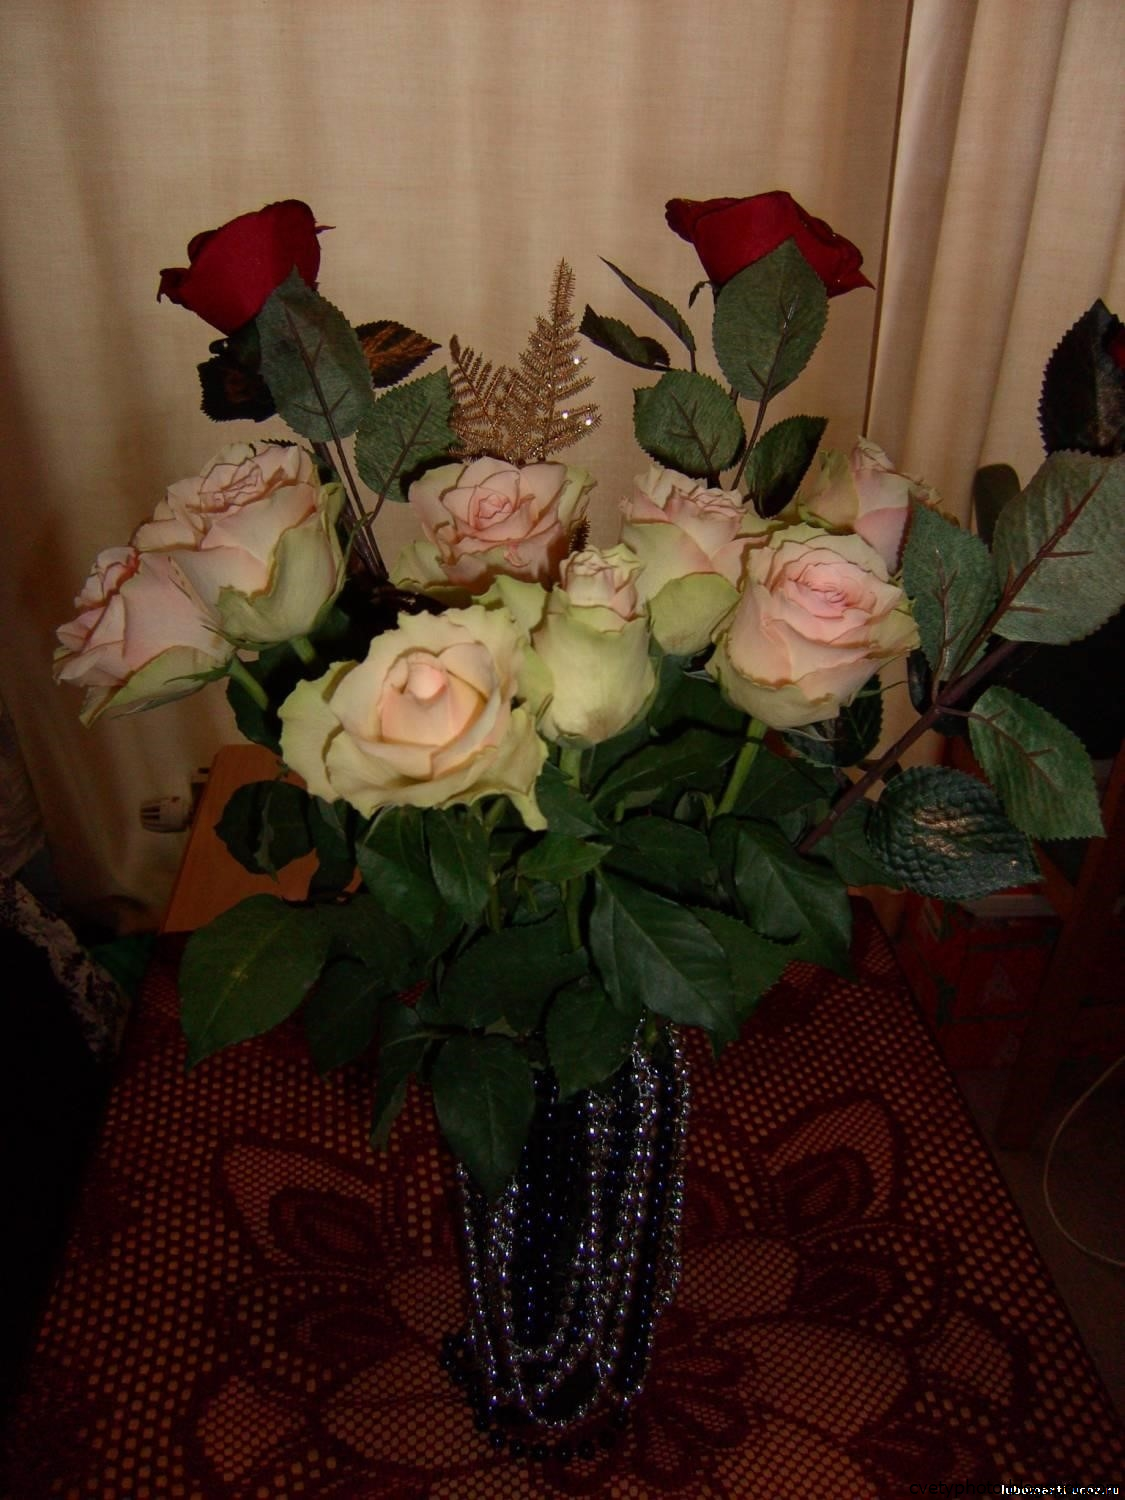 Букет цветов в вазе дома - 62 фото